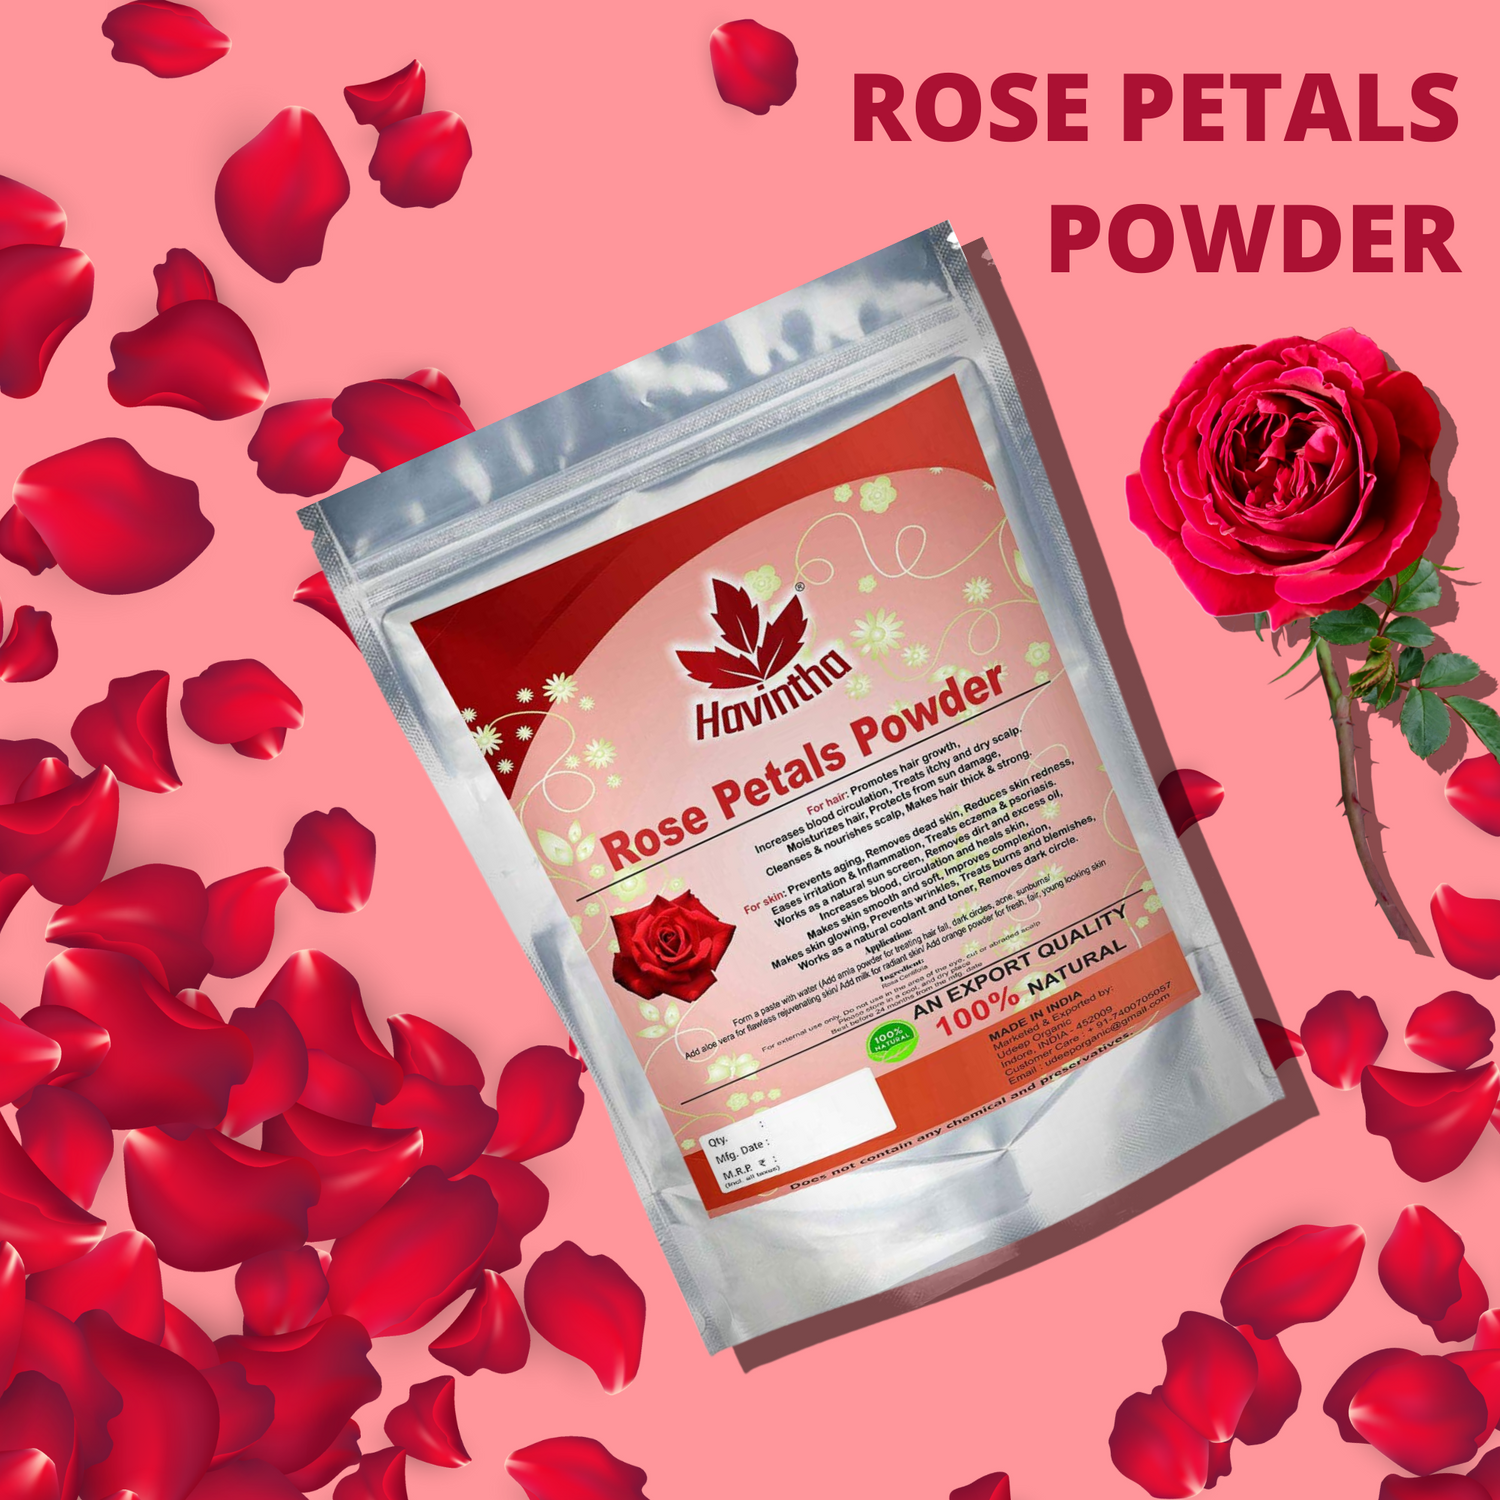  Rose Petal Powder, 8 oz